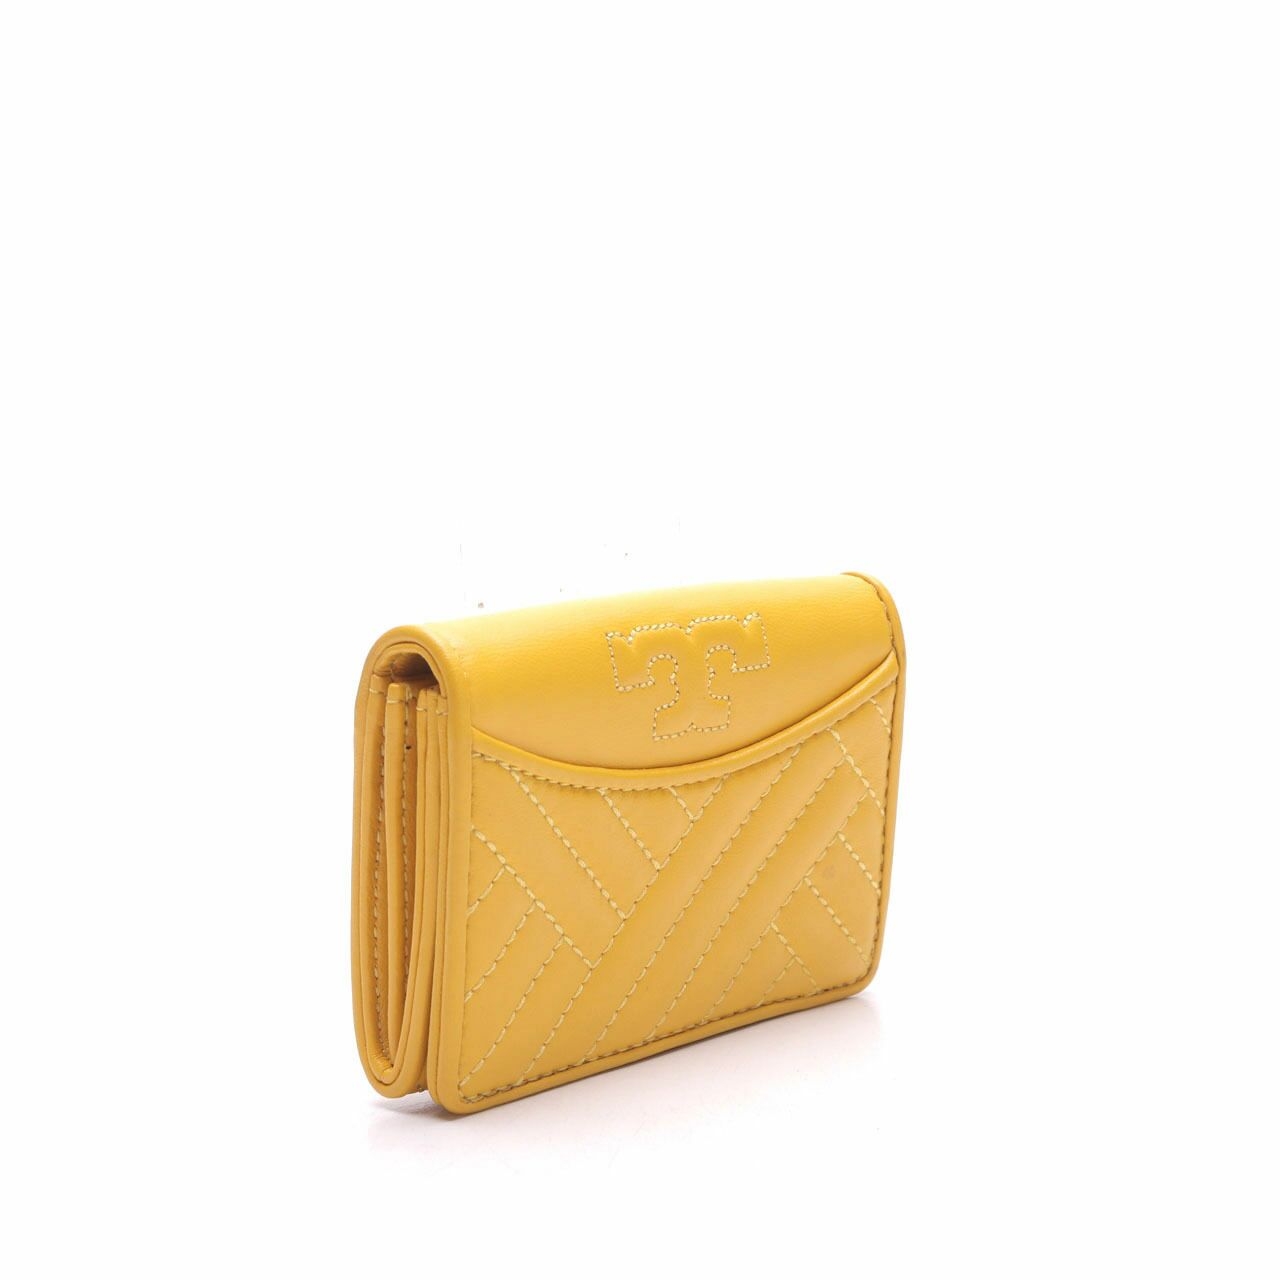  Tory Burch Yellow Alexa Mini Wallet 